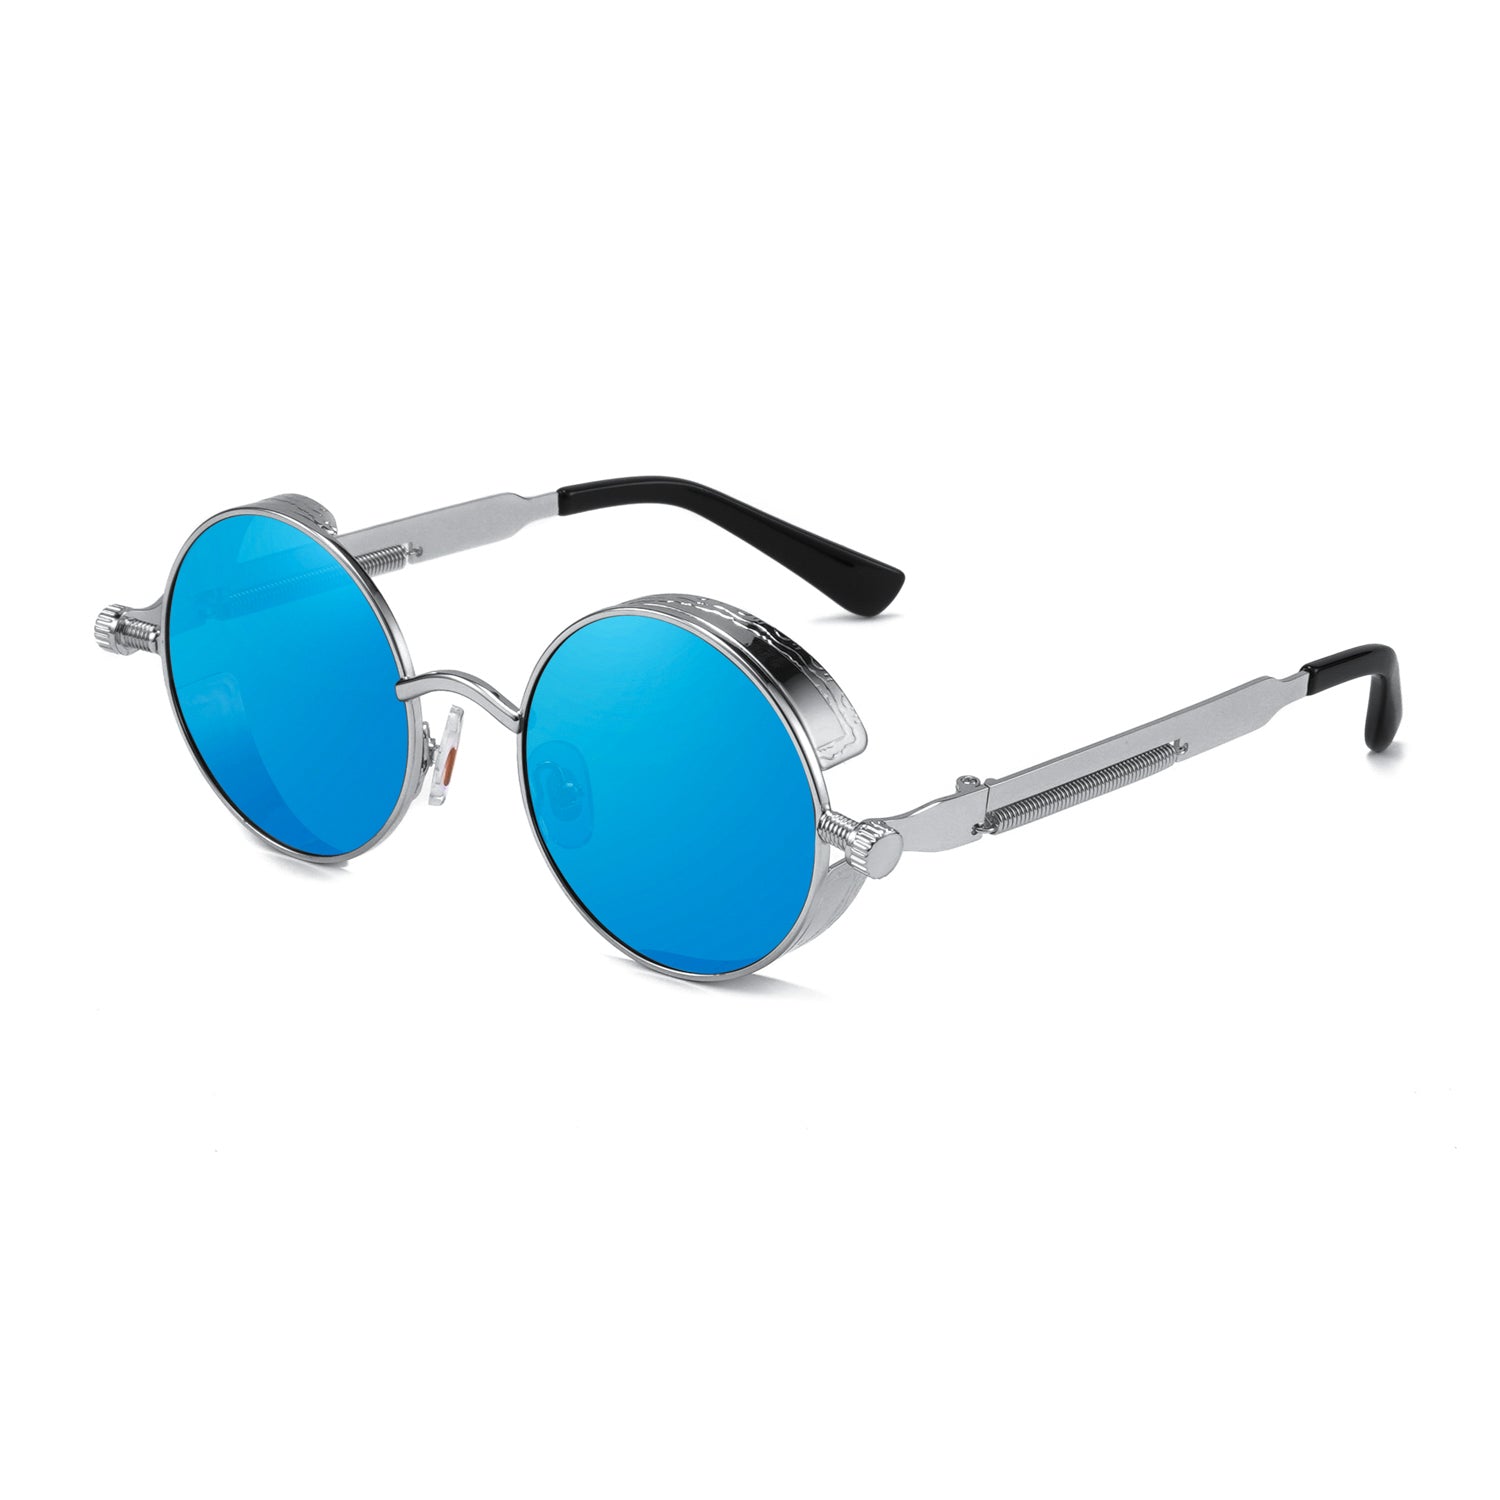 Jacob Steampunk Sunglasses